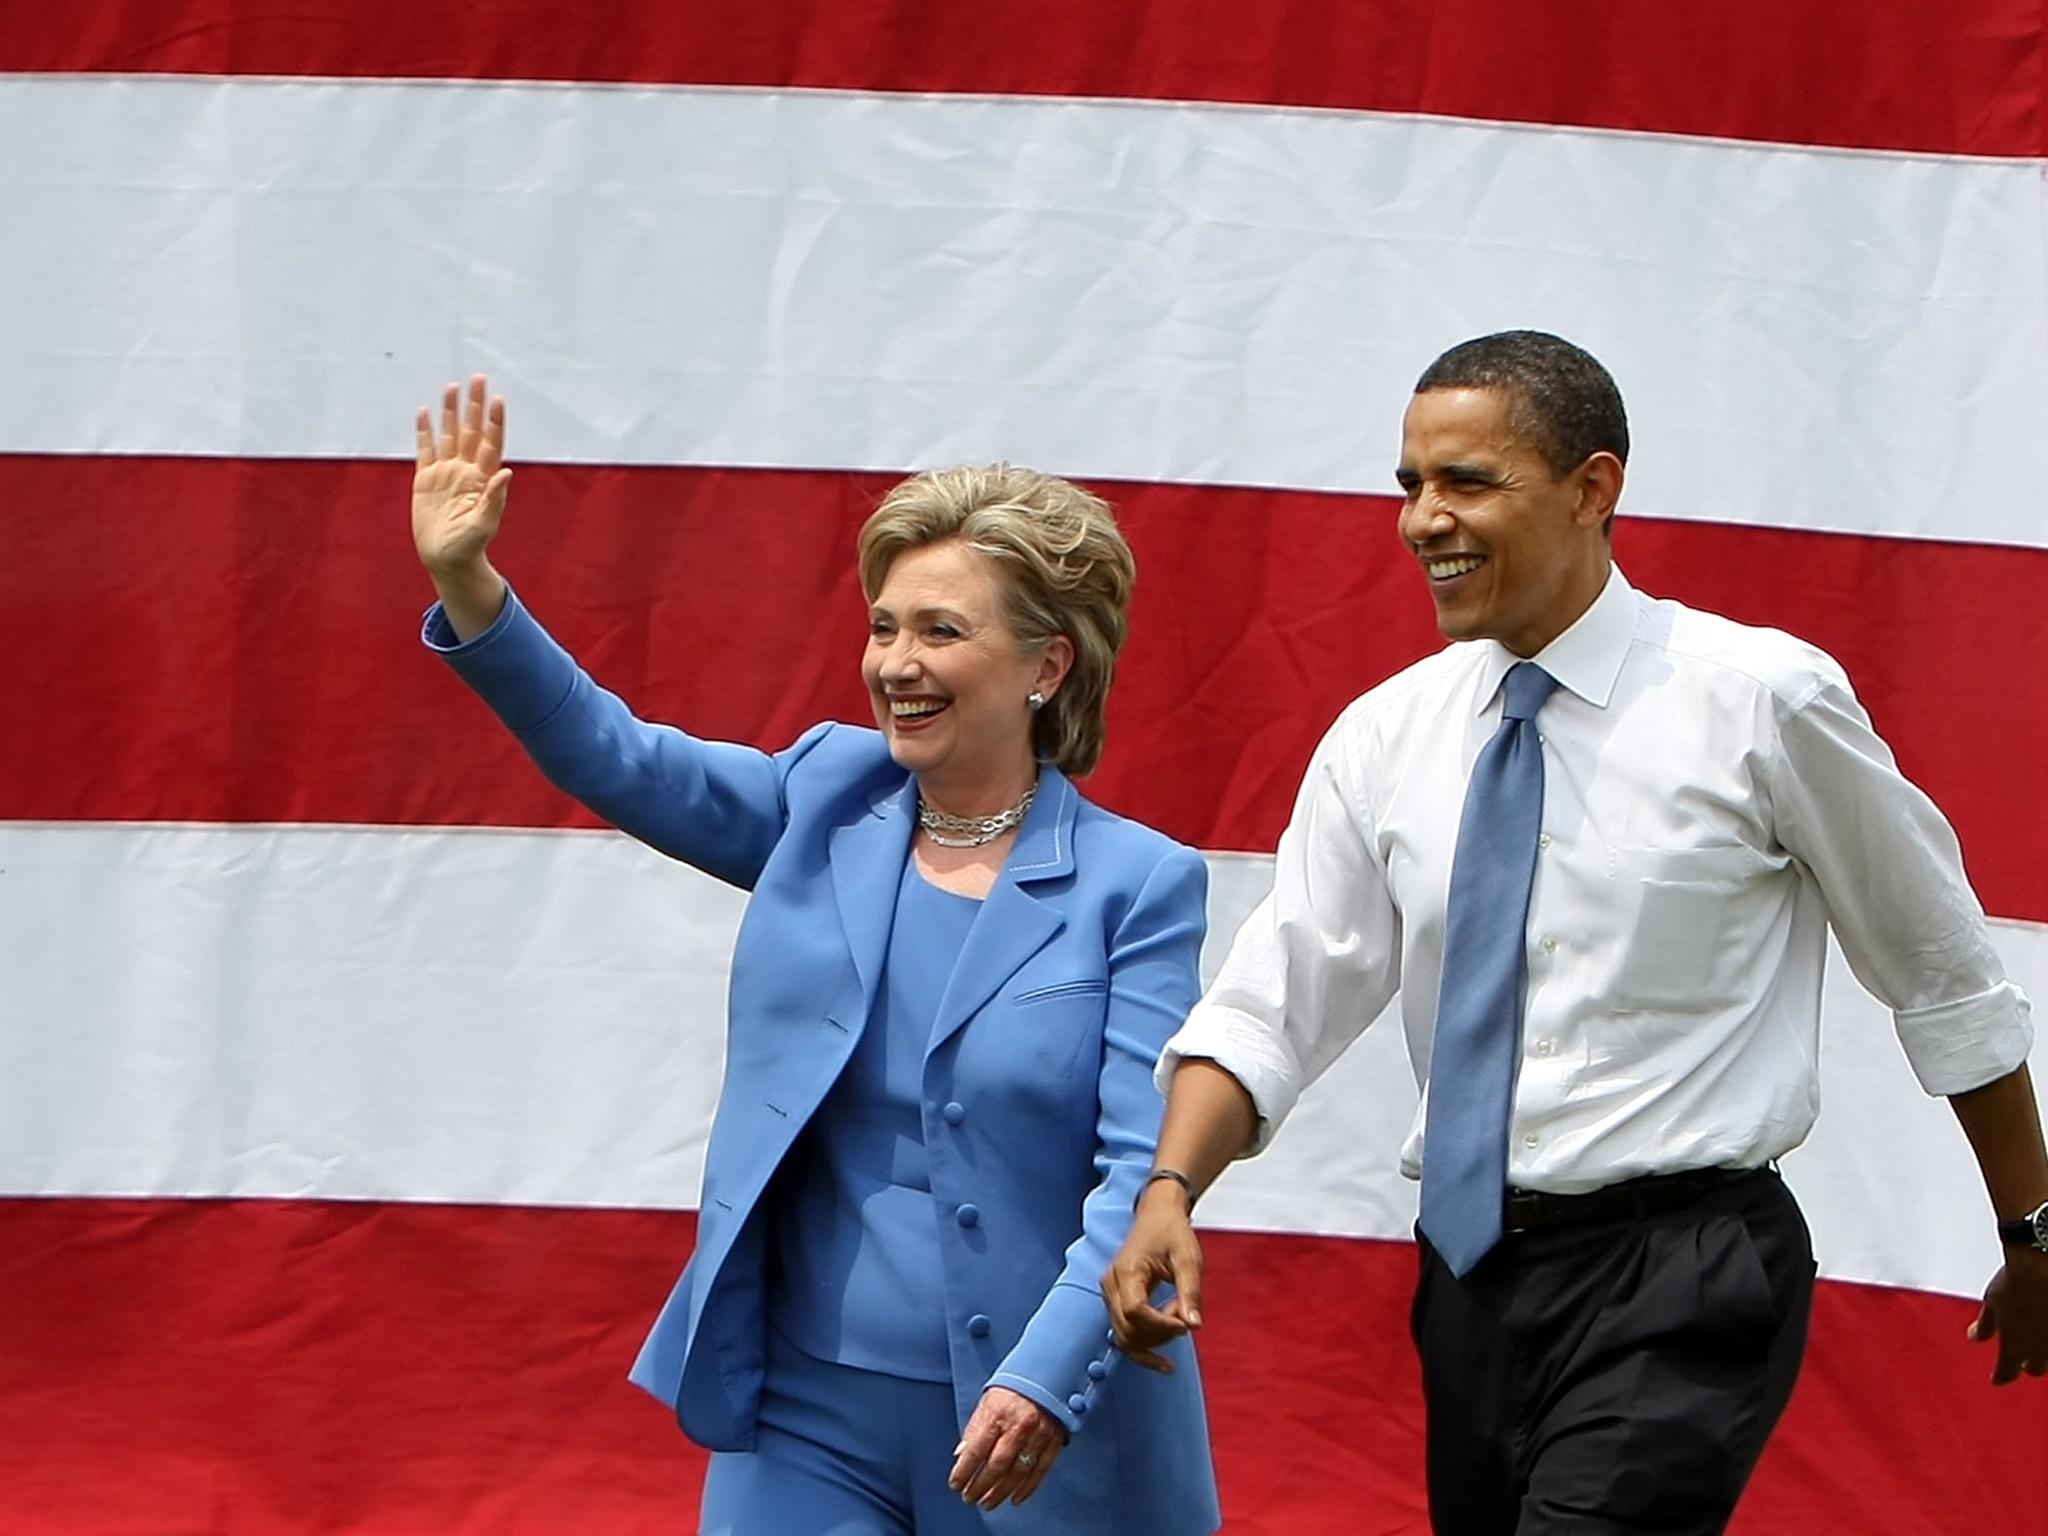 Clinton campaigns for Obama during 2008 presidential run Mario Tama/Getty